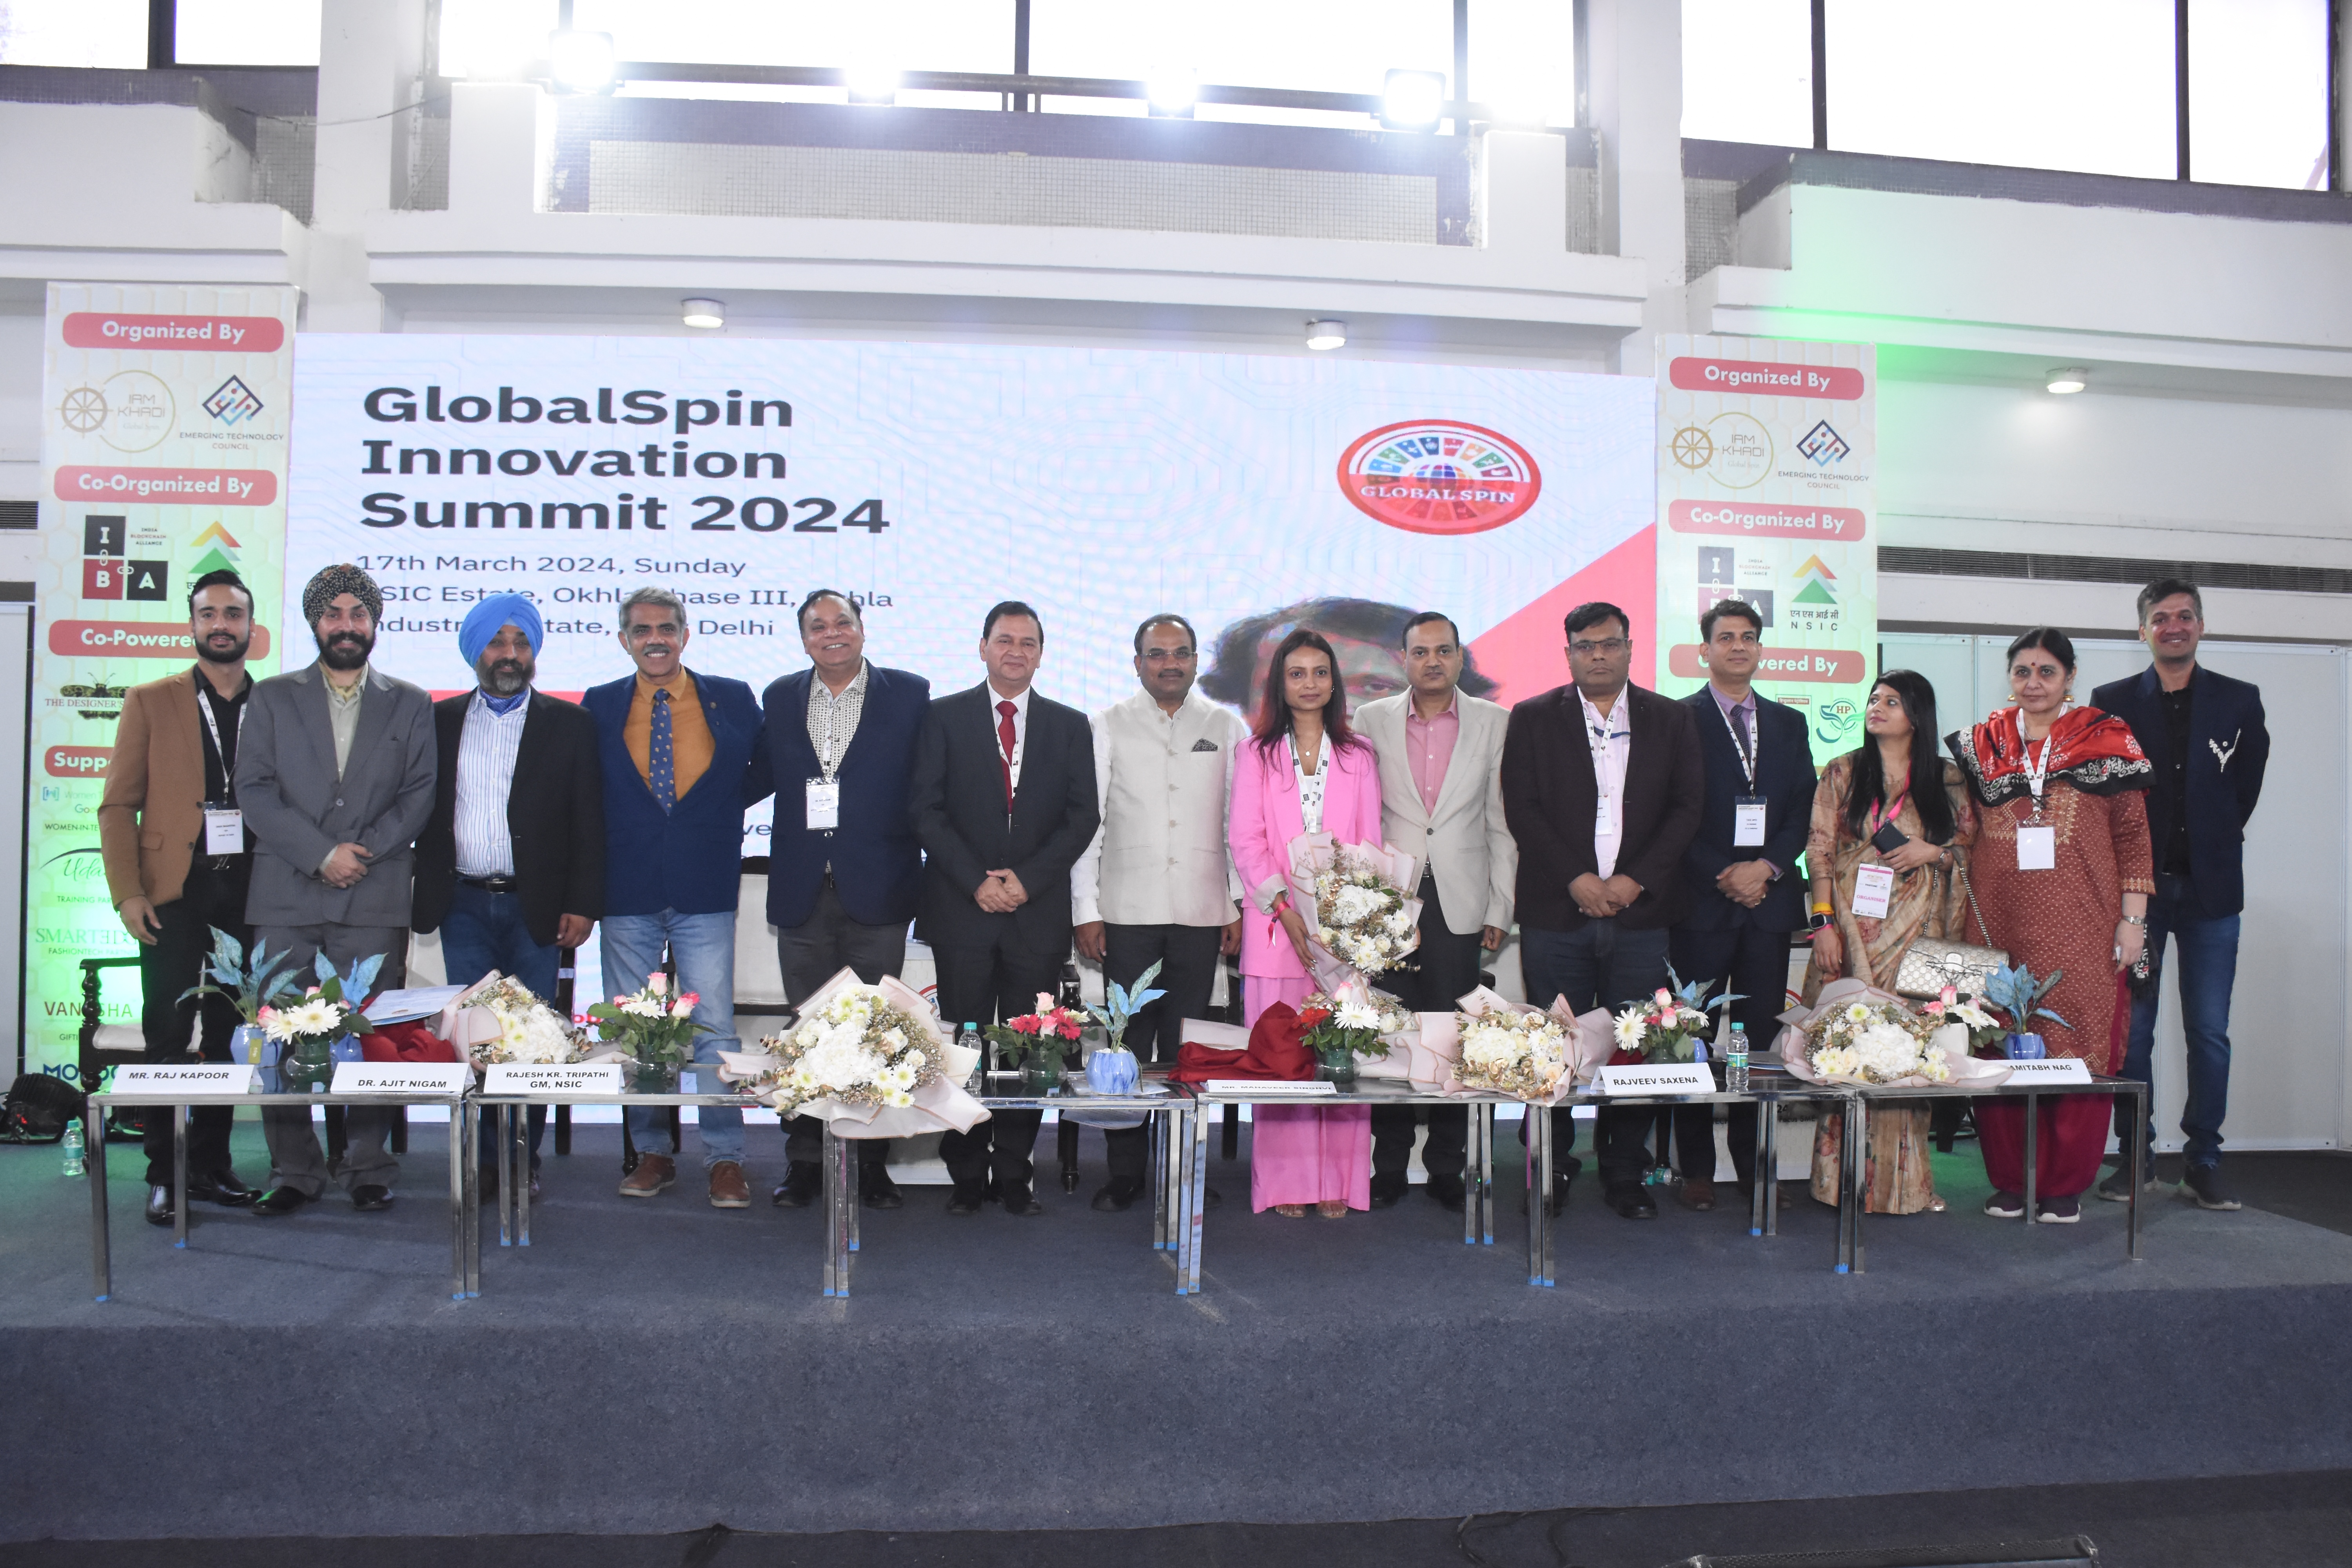 Globalspin Innovation Summit